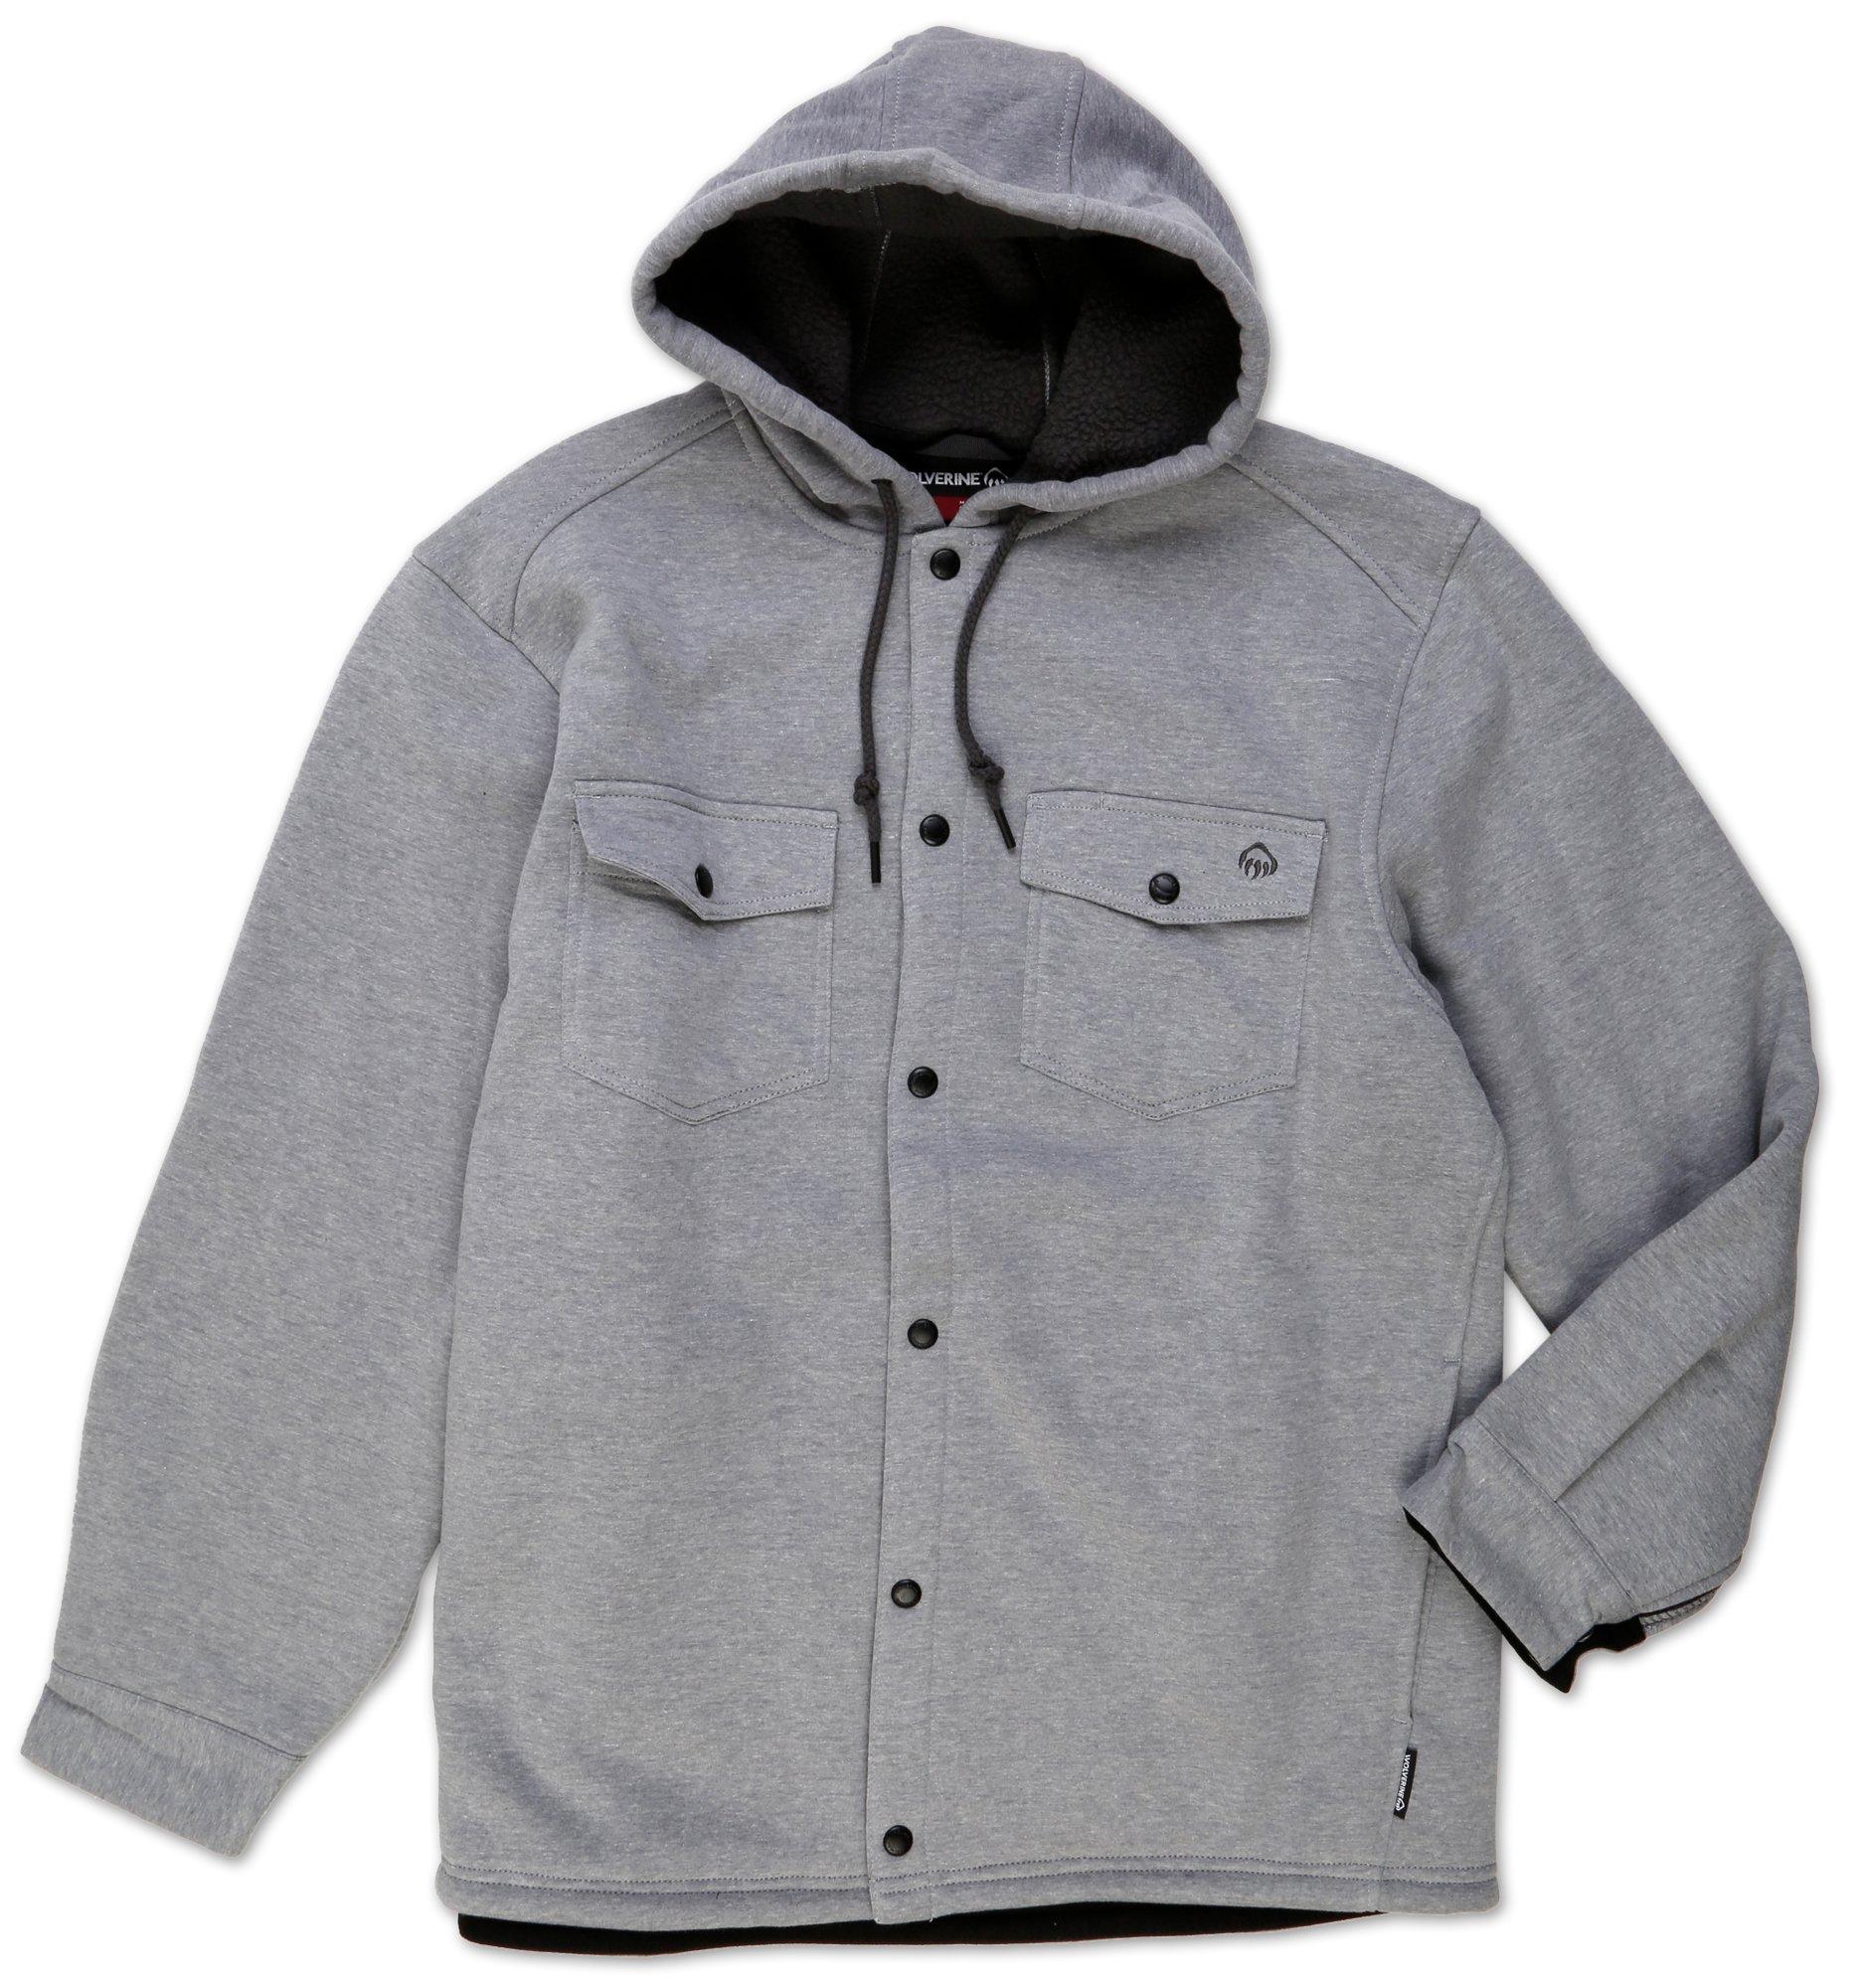 Men's Button Up Fleece Jacket - Grey